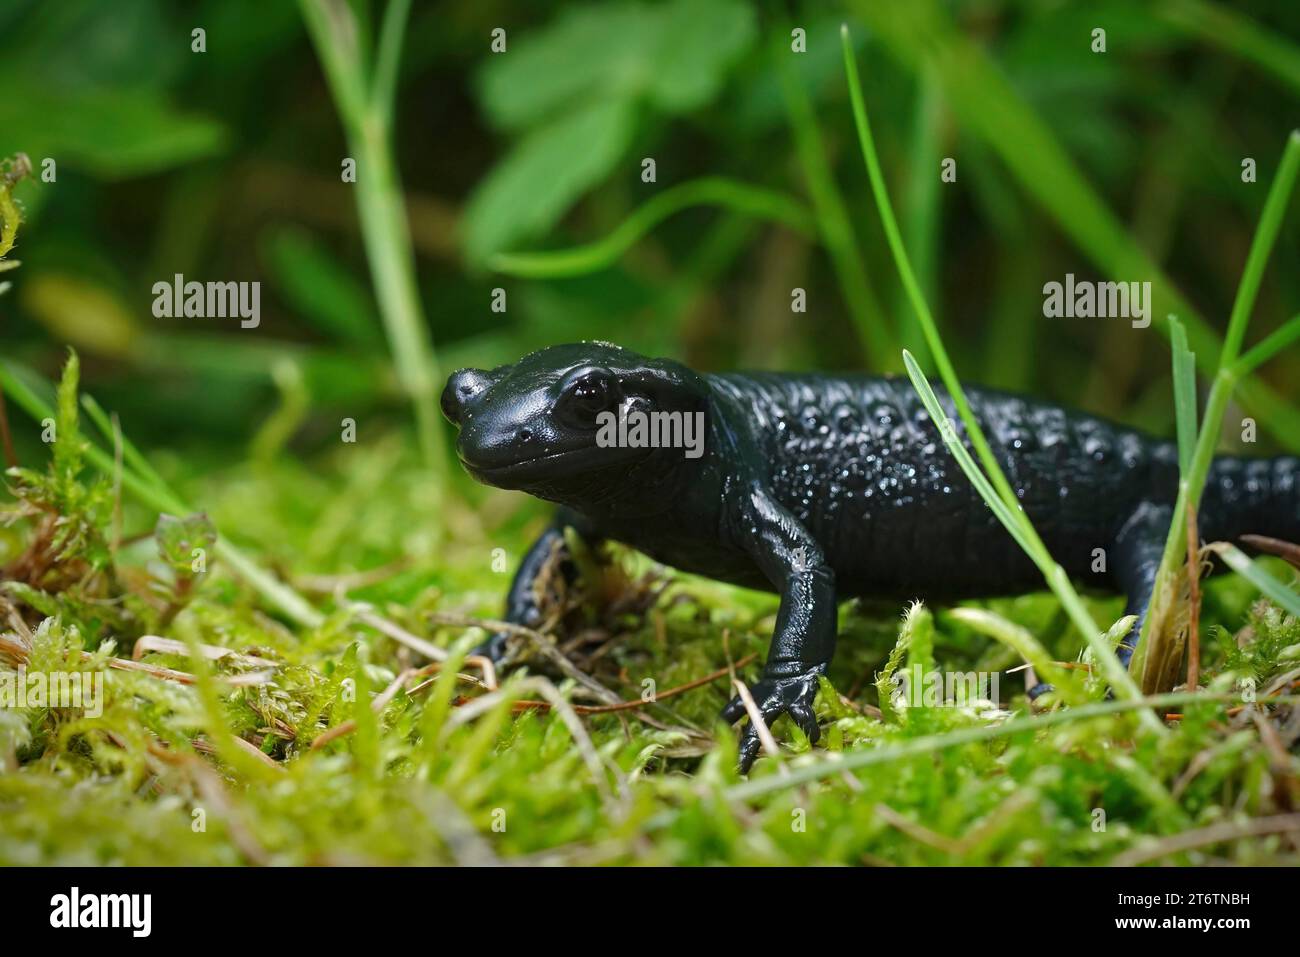 Gros plan naturel sur la salamandre alpine noir charbon, Salamandra atra culminant à travers l'herbe Banque D'Images